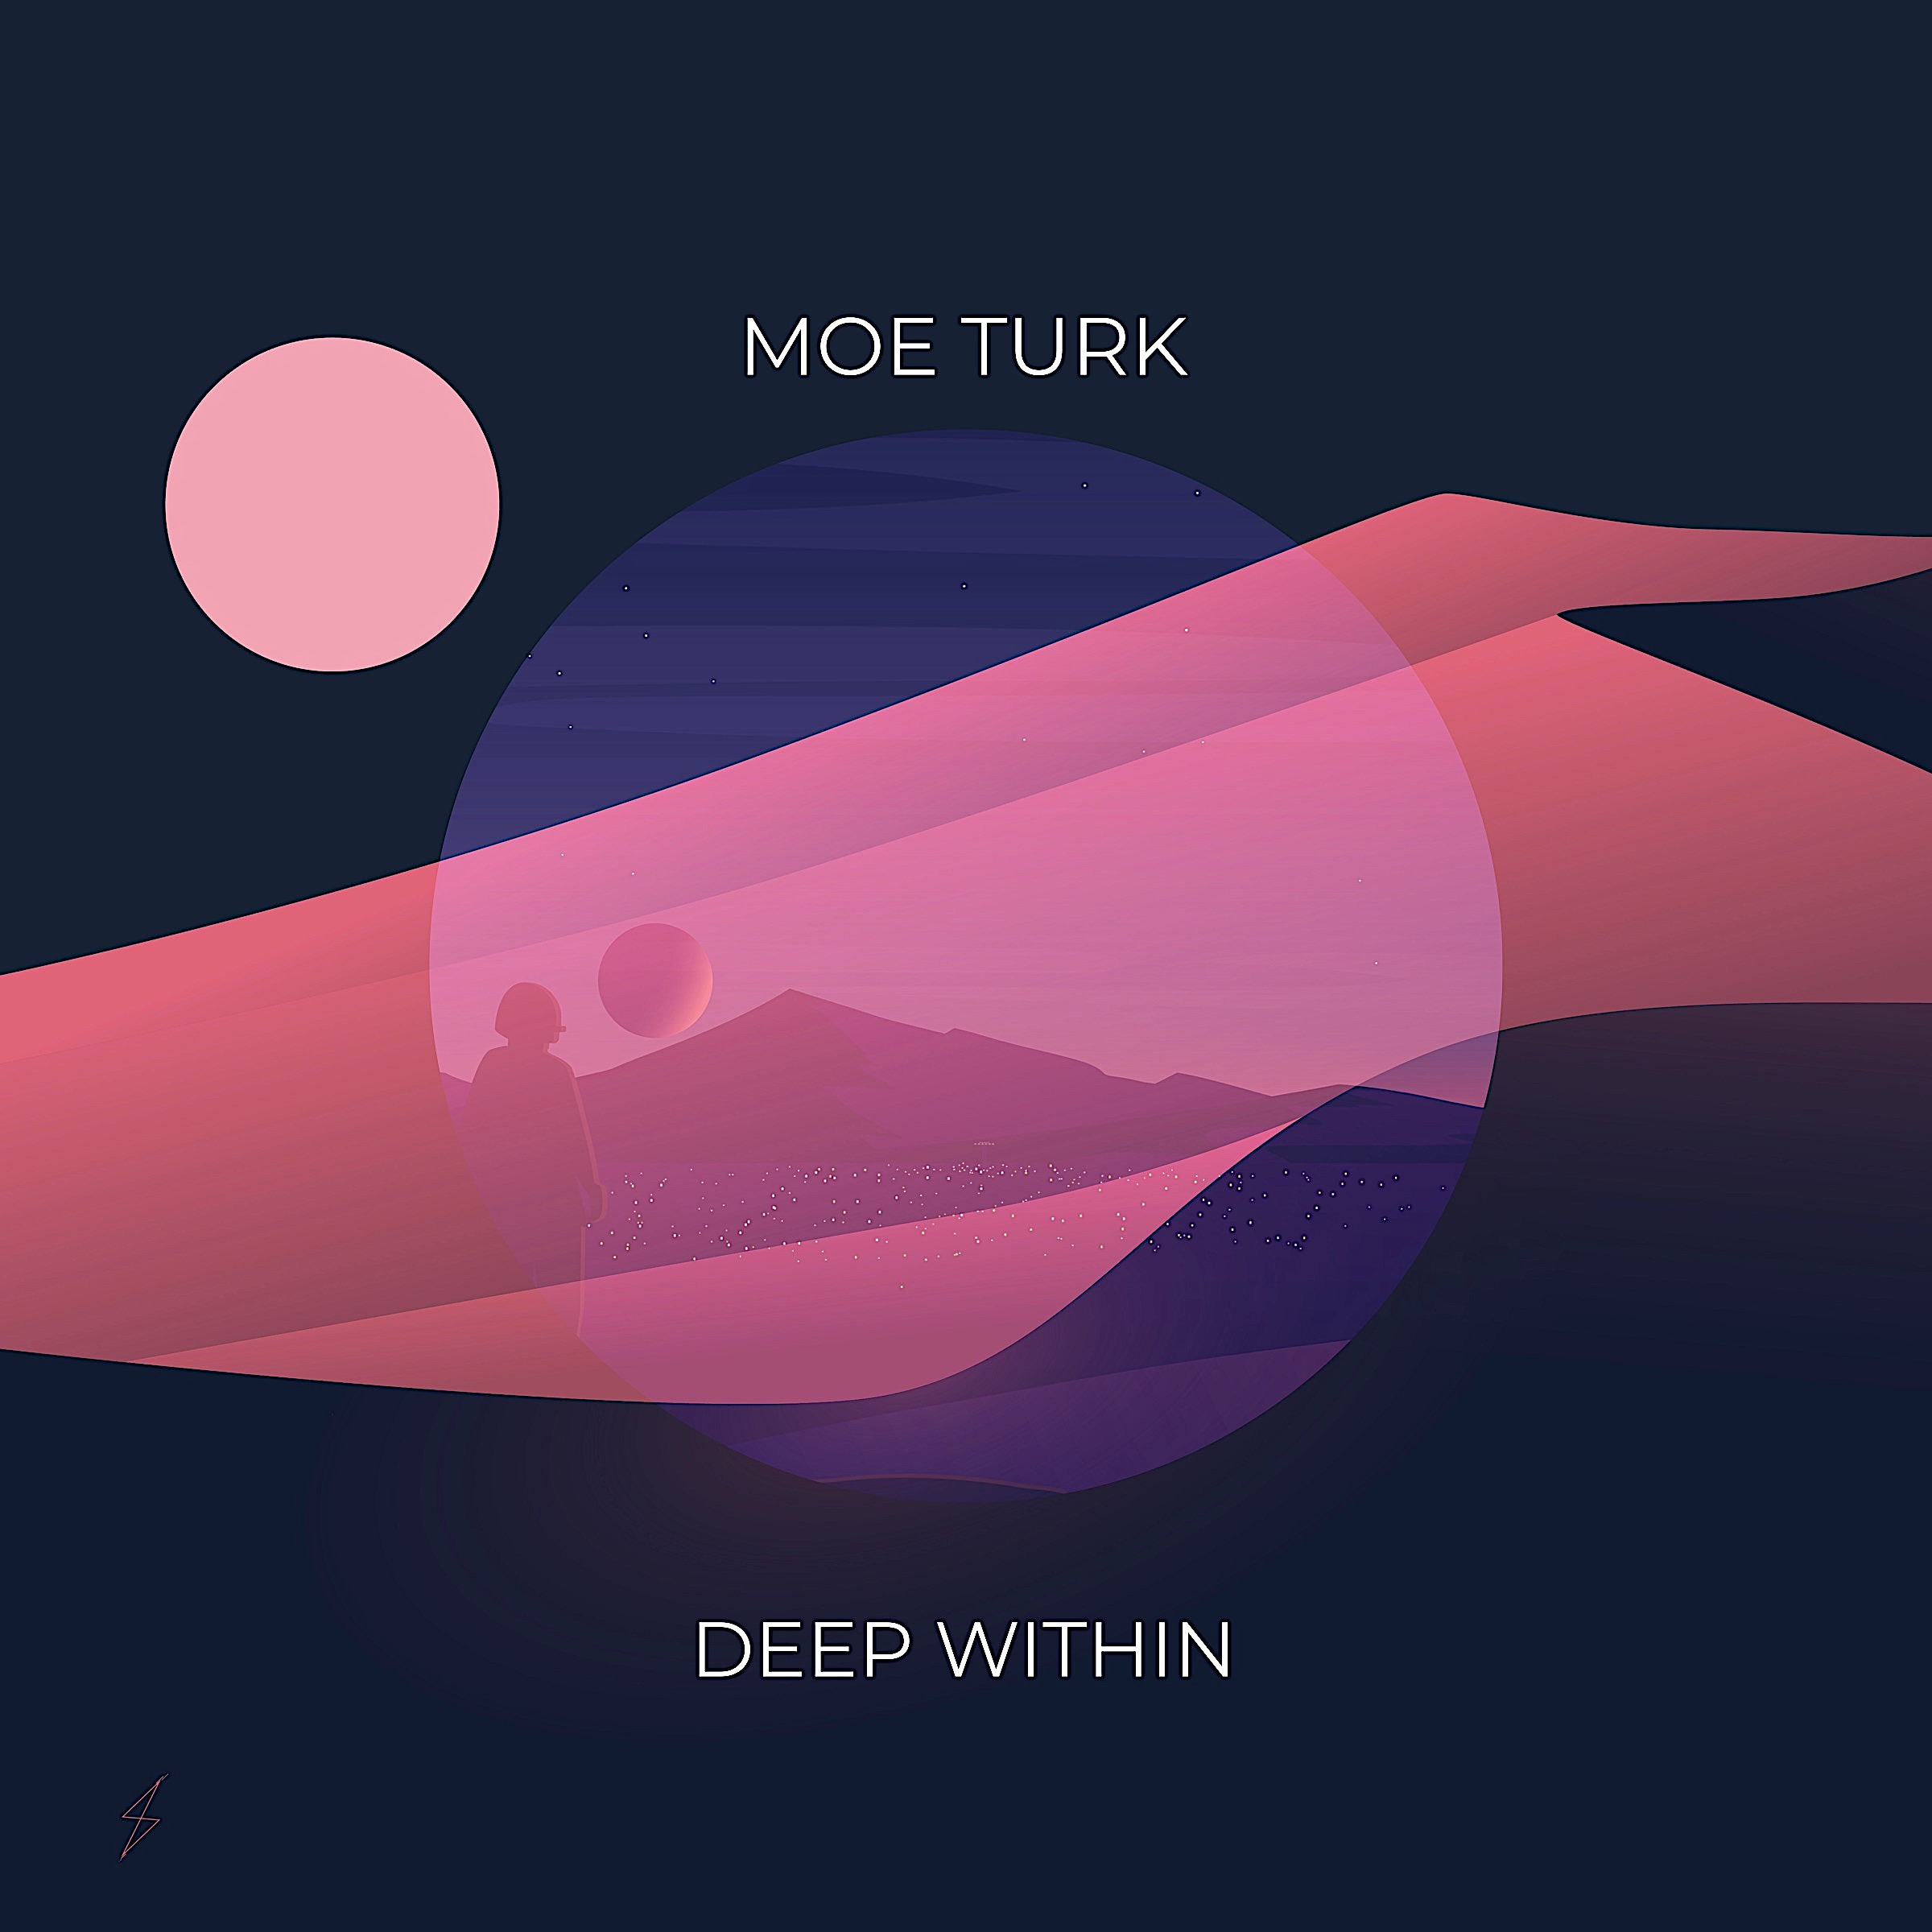 Moe Turk Deep House. Moe Turk. Moe Turk hold me close Original Mix. Moe_Turk_-_recorded_Set_360_Dubai. Deep within